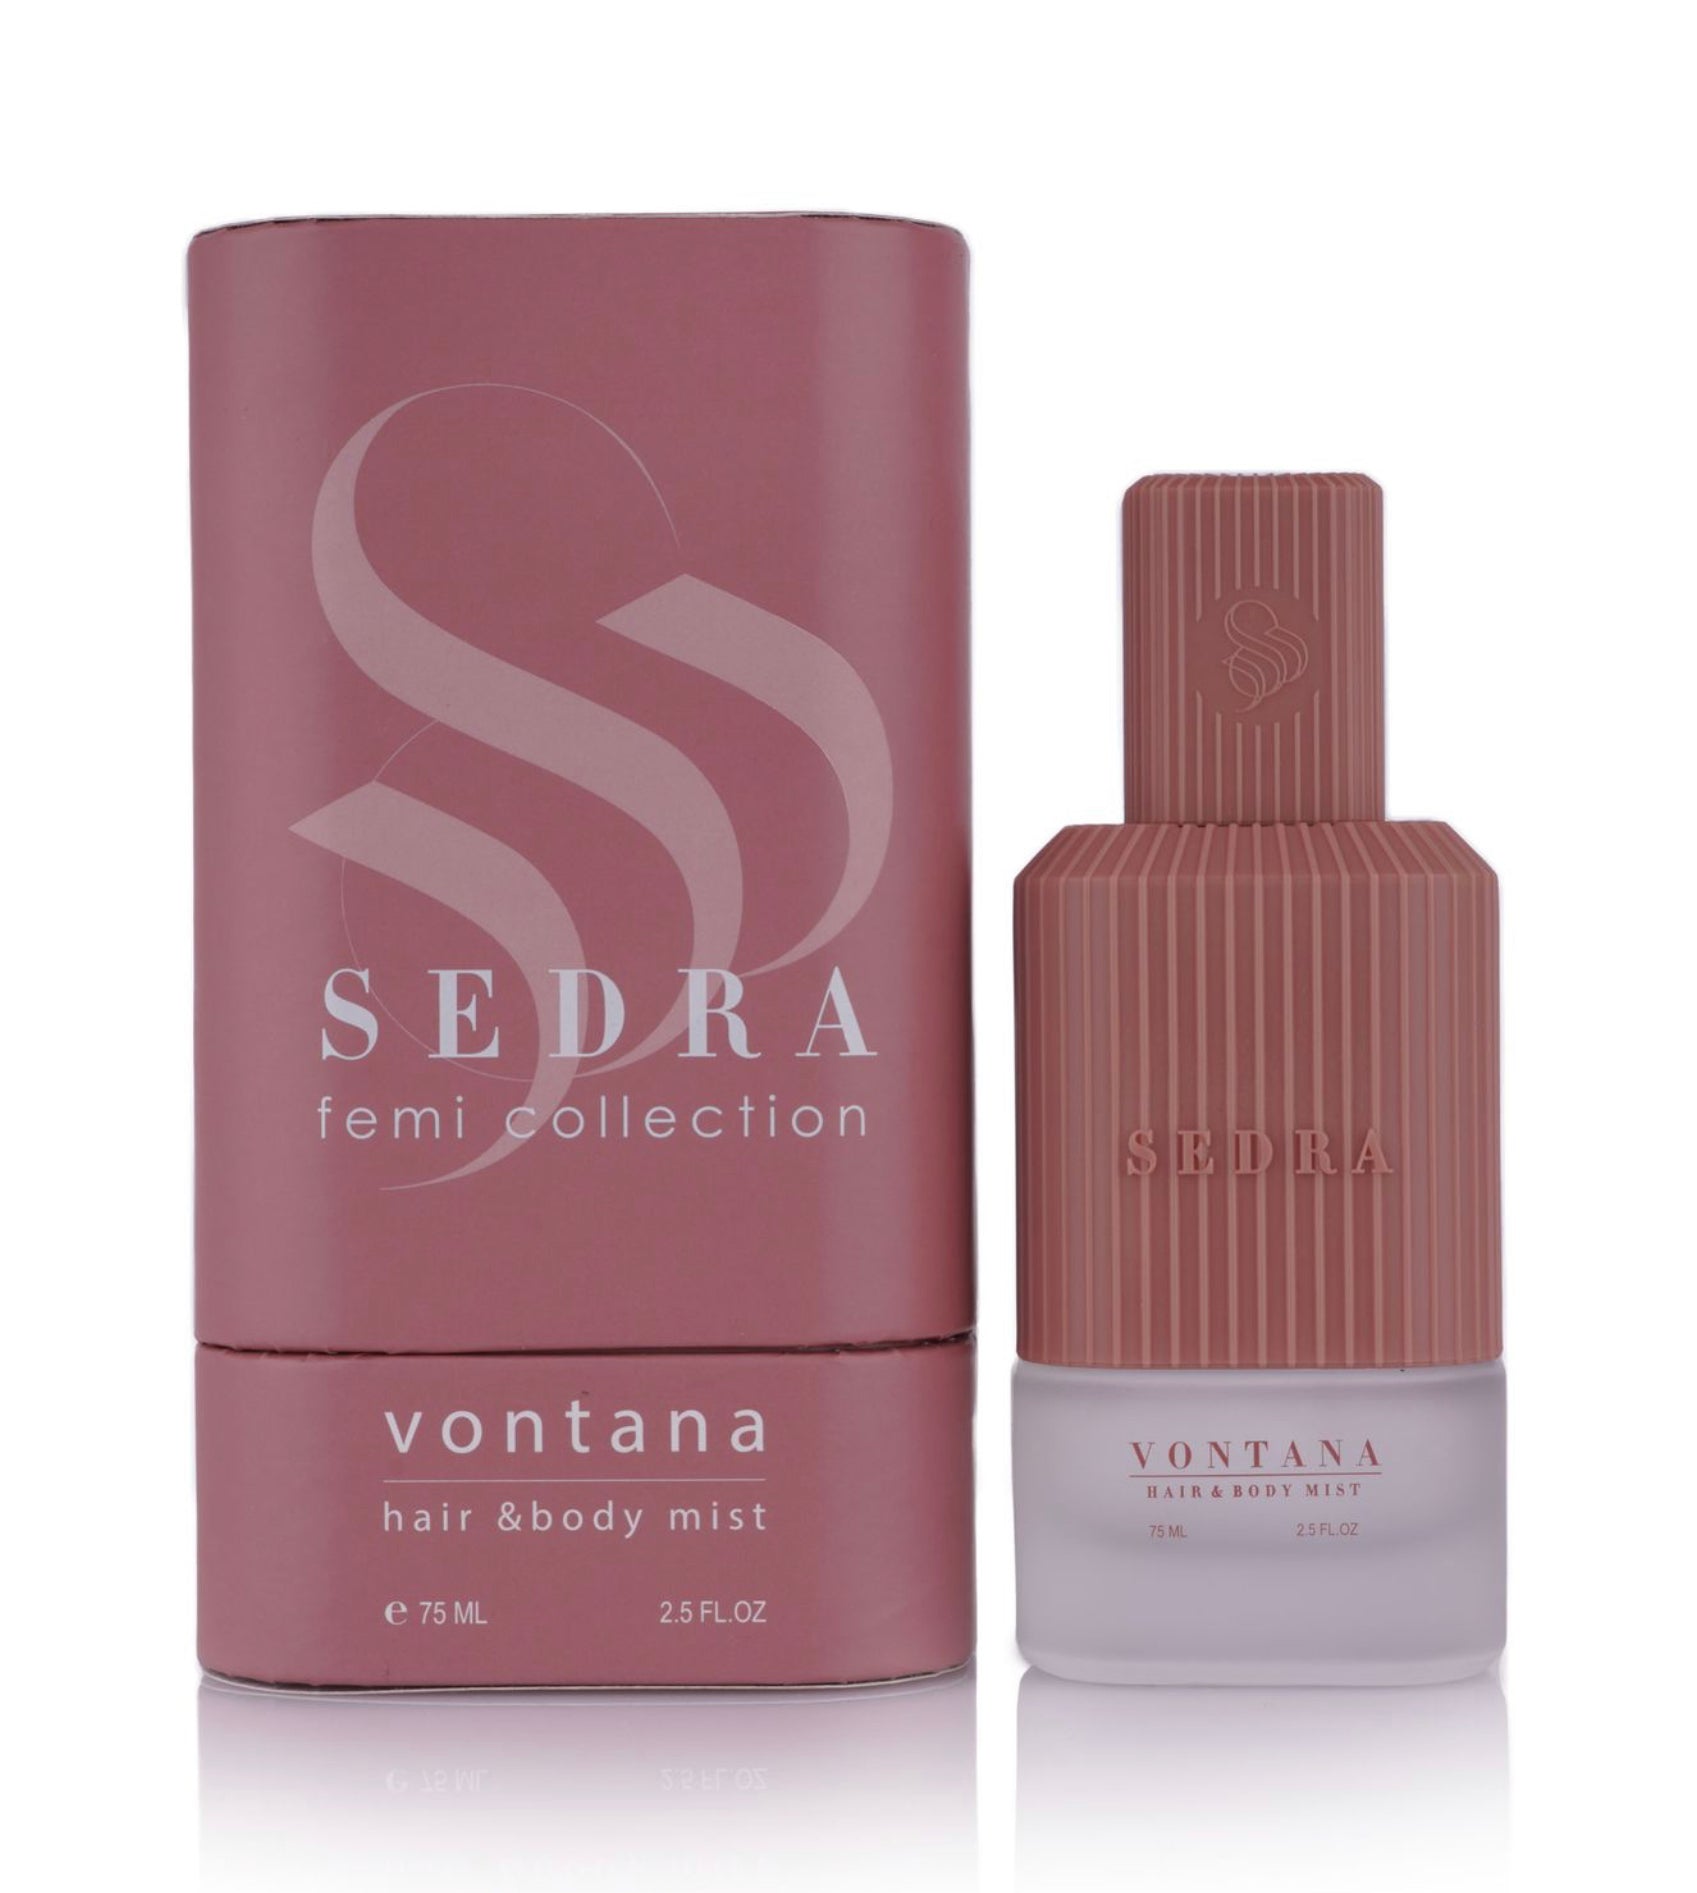 Sedra Vontana Hair & Body Mist - 75ml